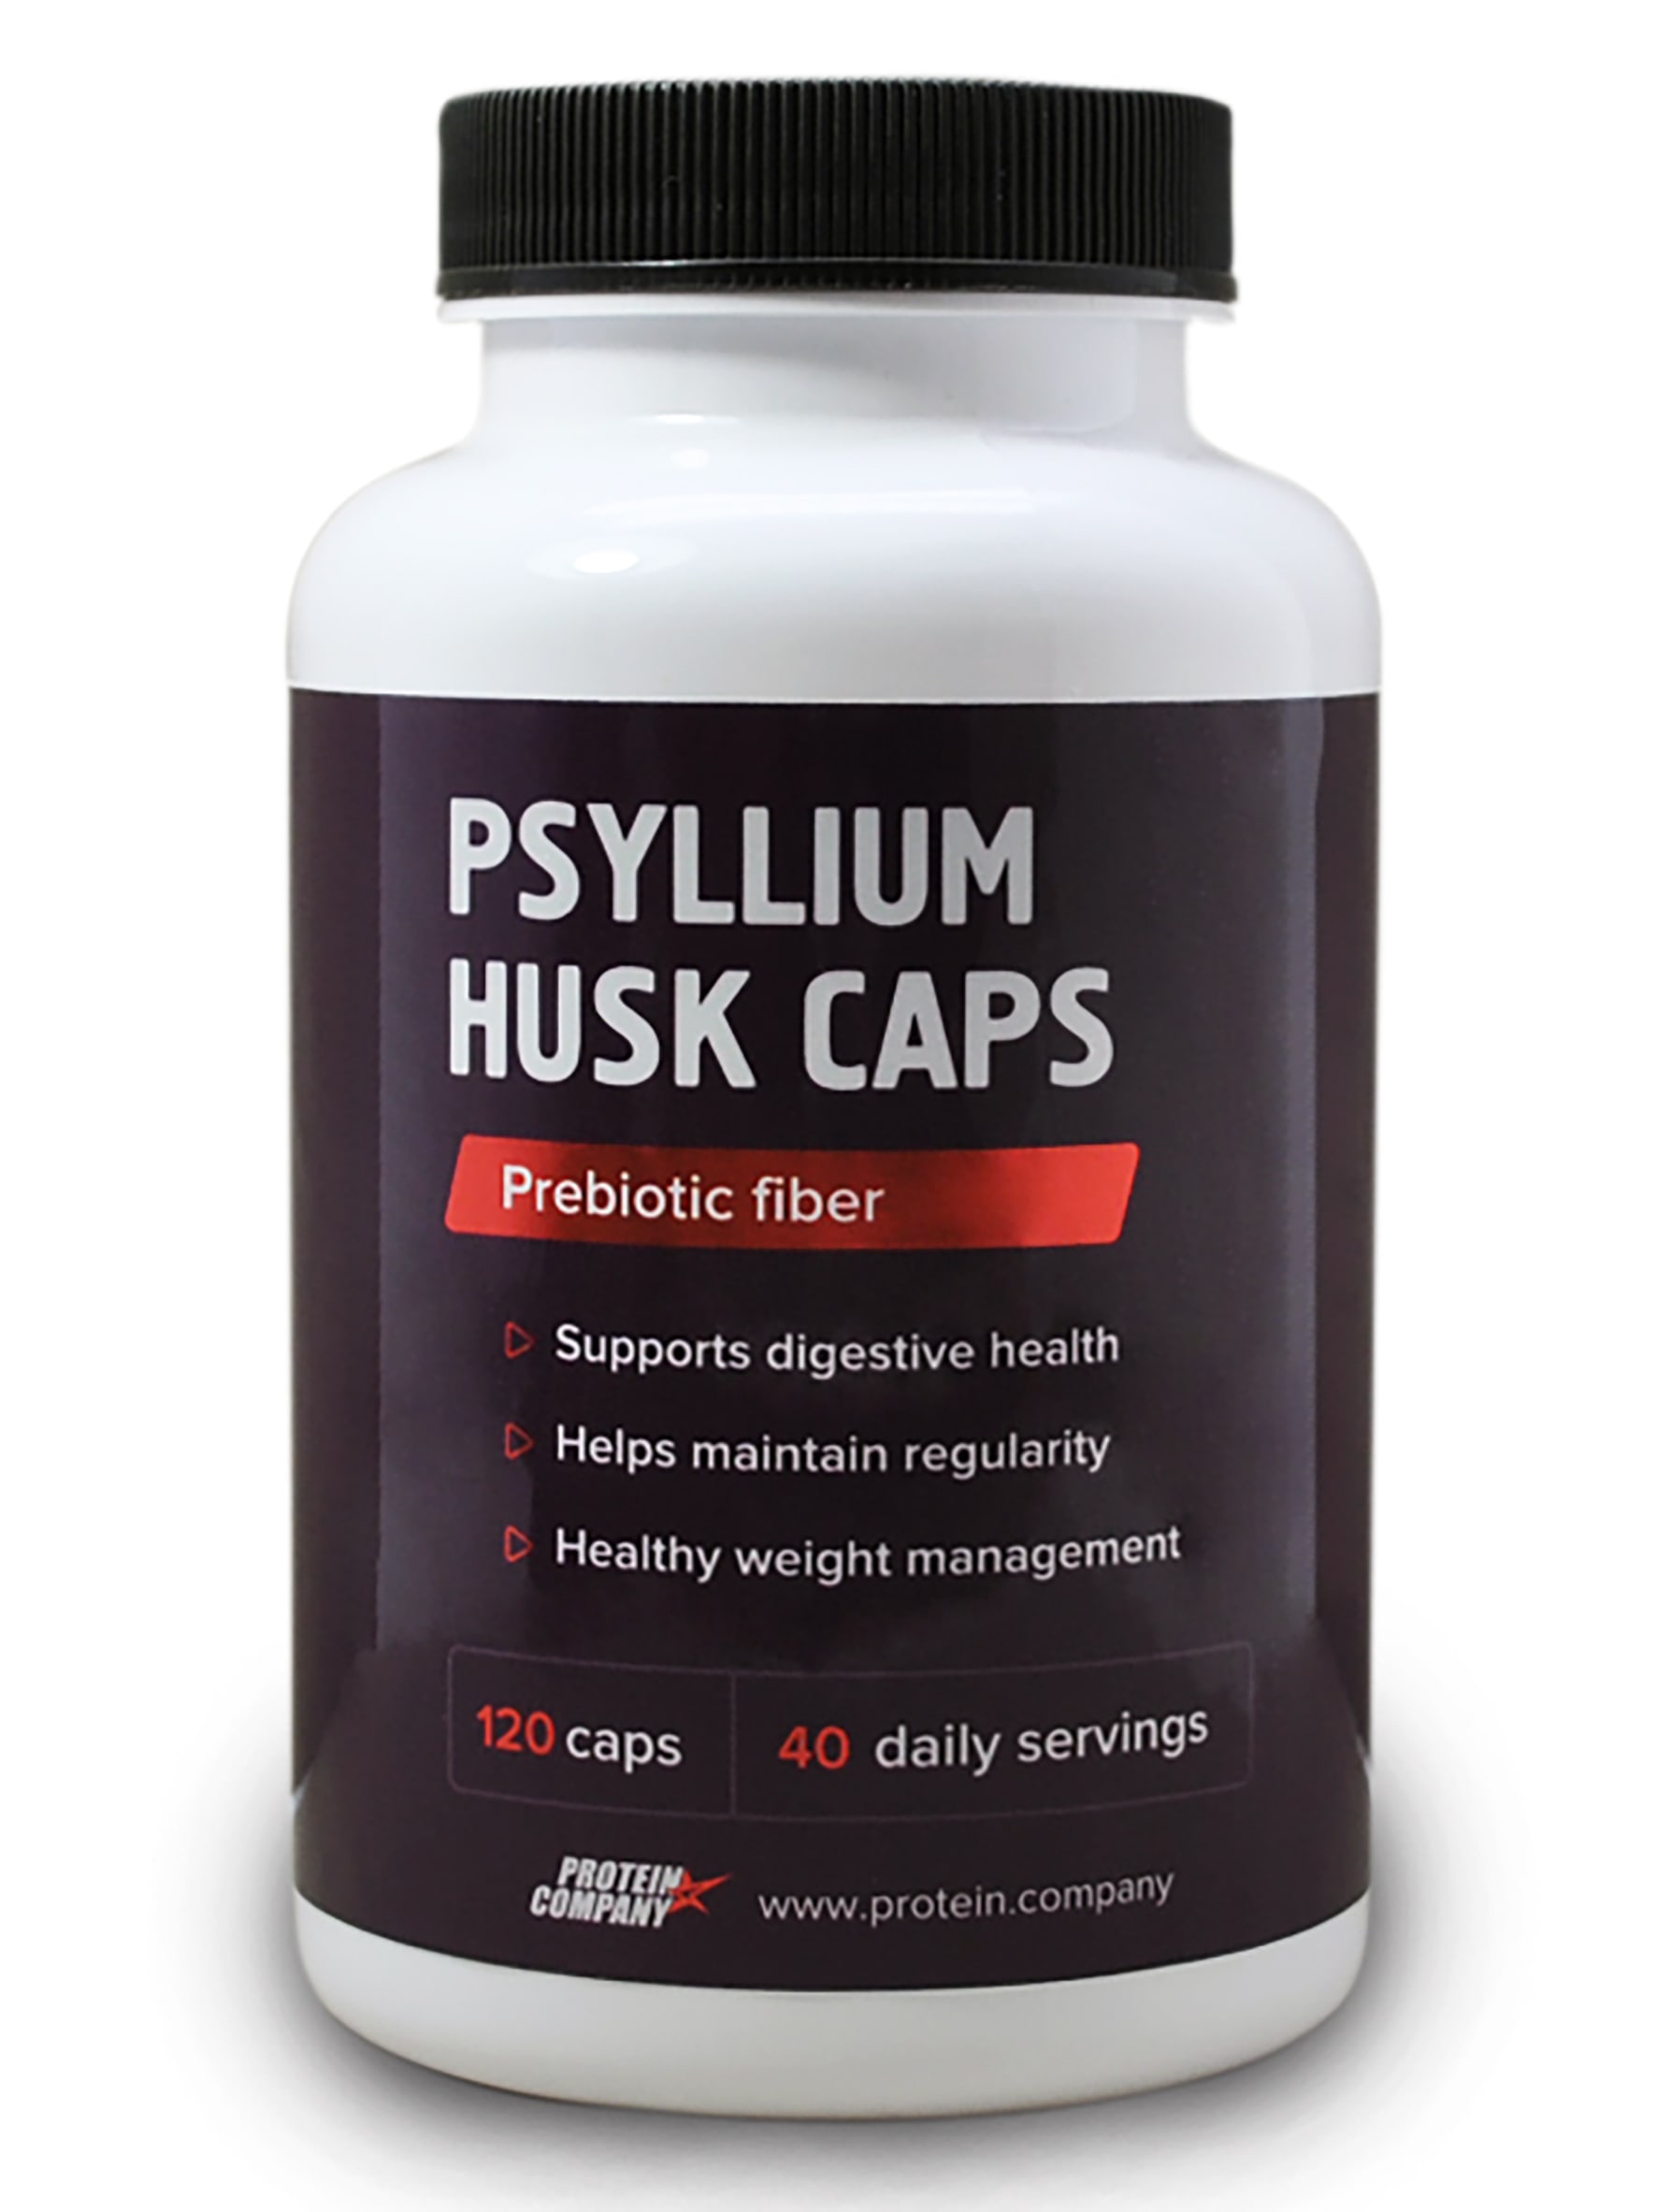 Psyllium husk caps